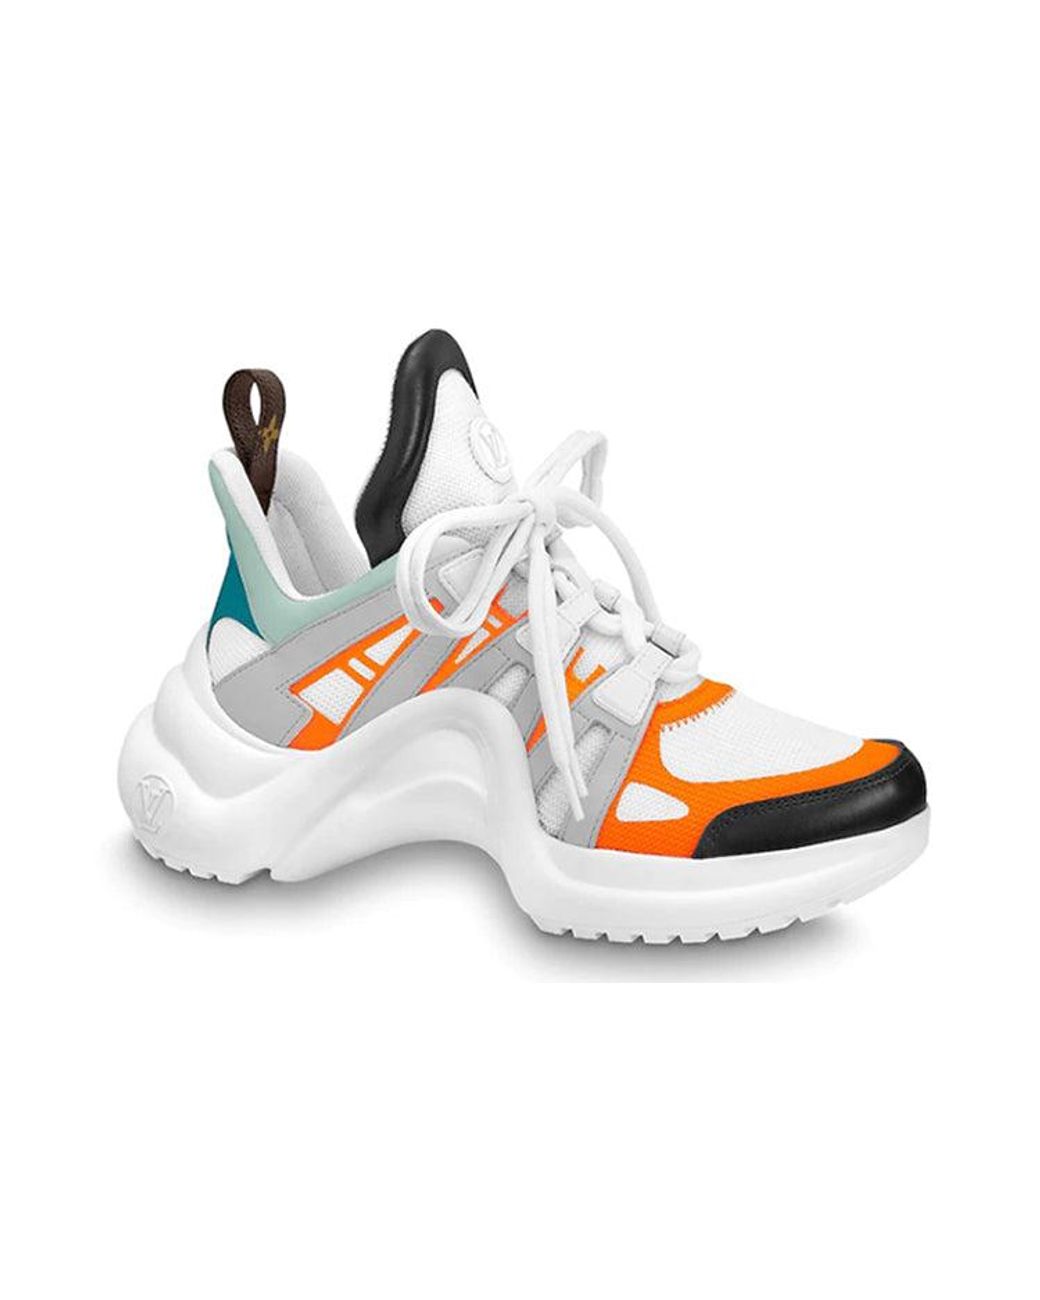 WMNS) LOUIS VUITTON LV Archlight Sports Shoes White/Orange 1A65RA